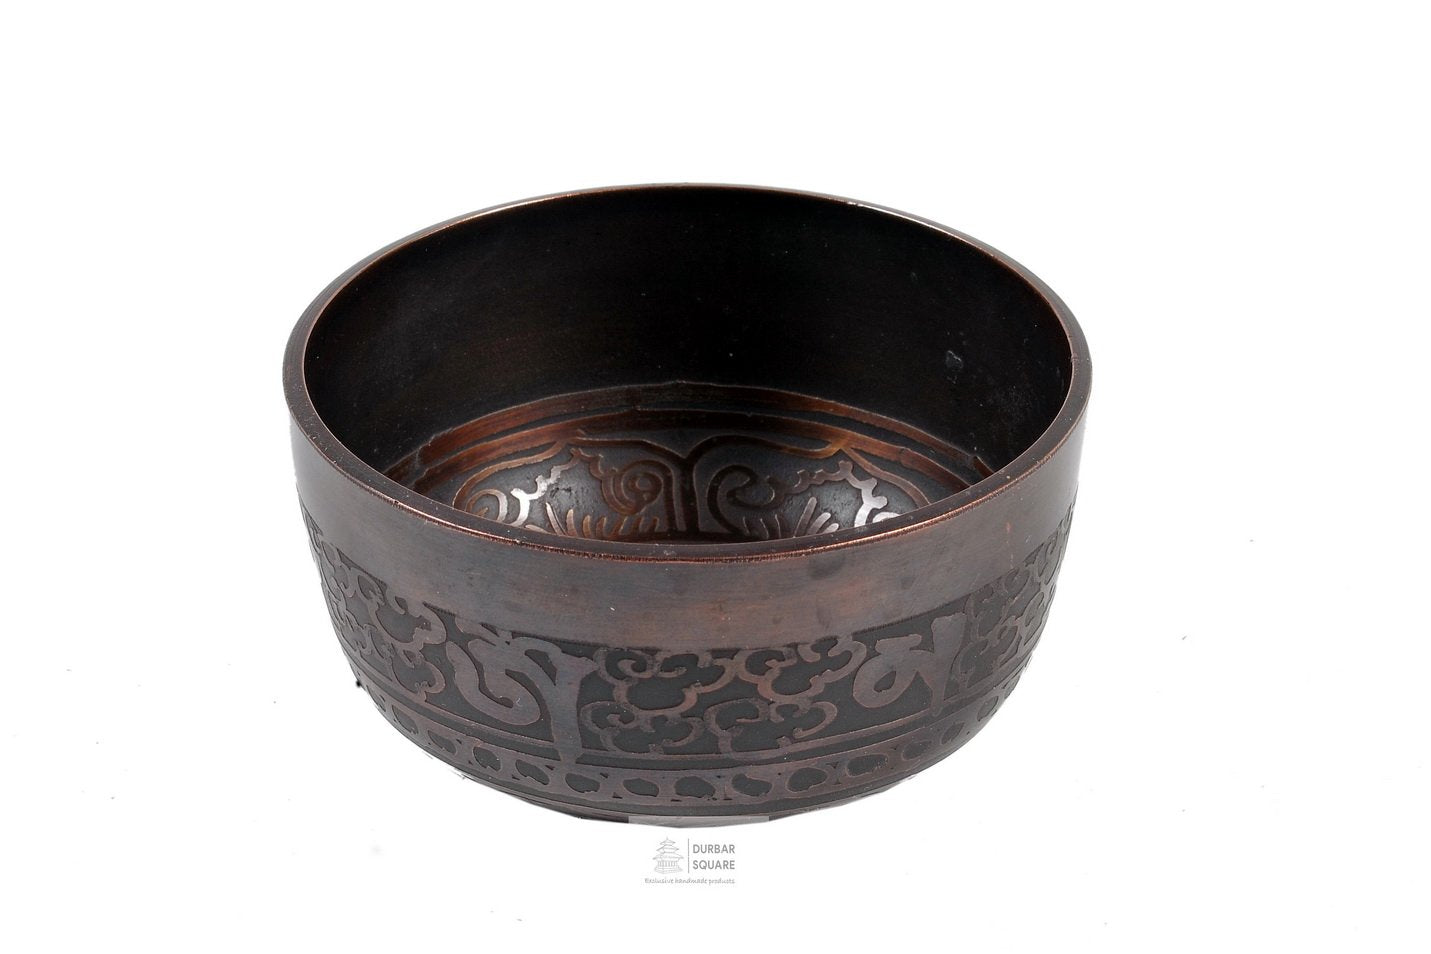 Singing bowl with Bajra engraved